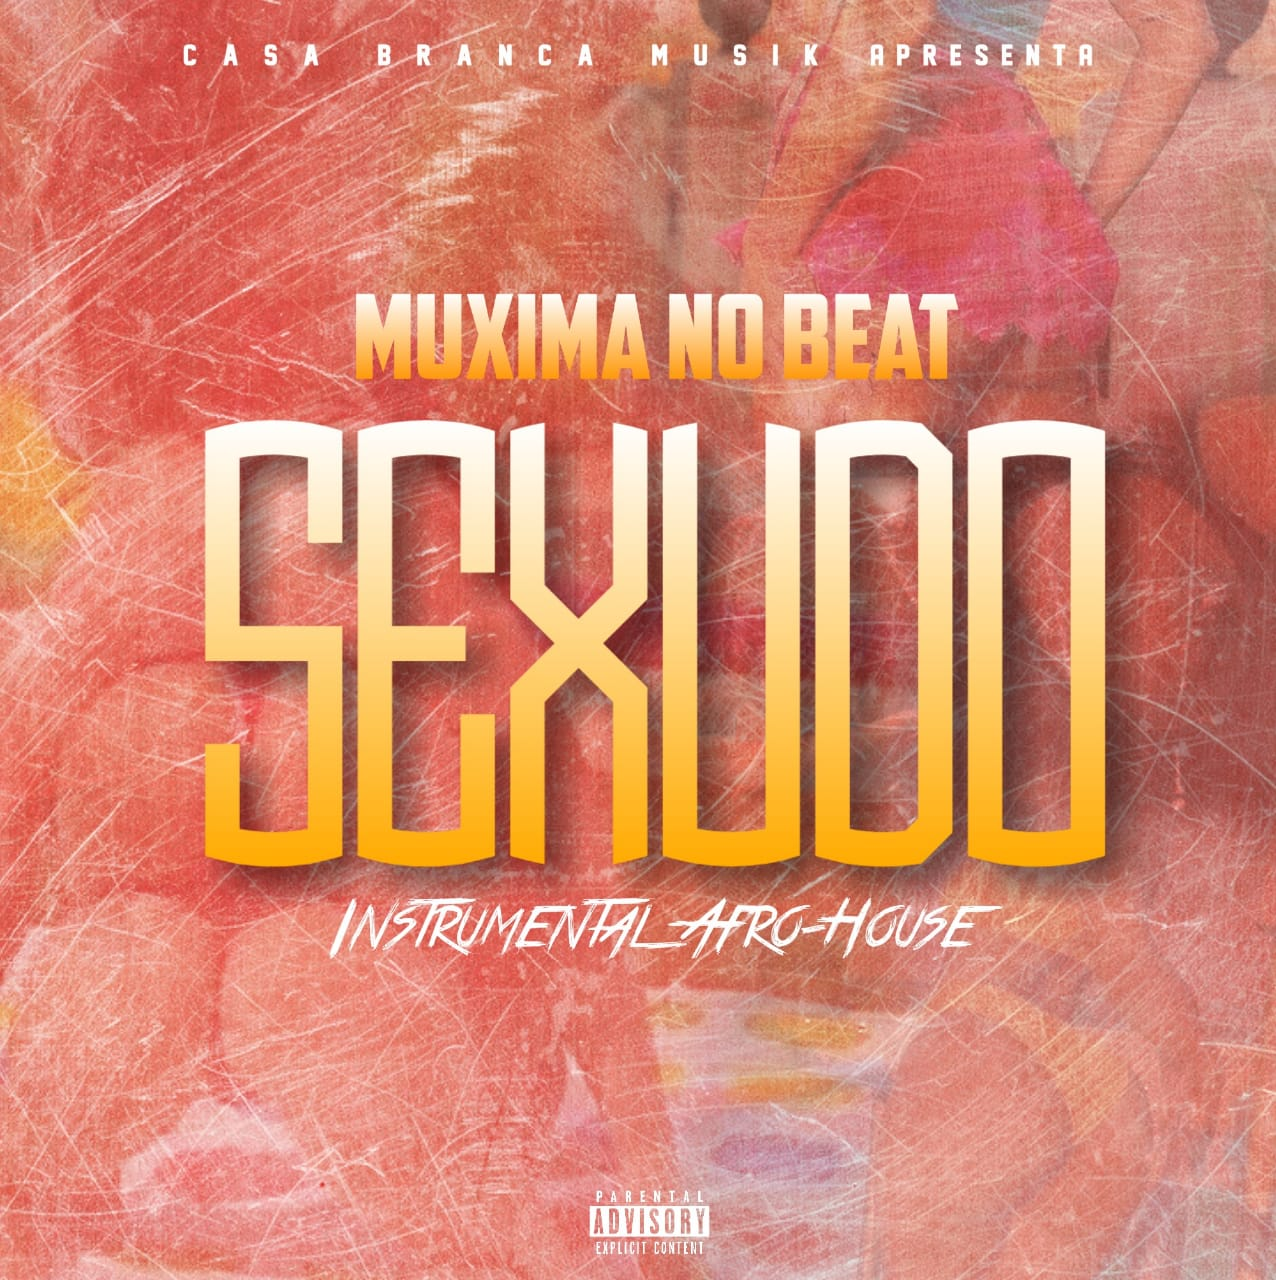 Muxima No Beat - Sexudo (Instrumental Afro House)